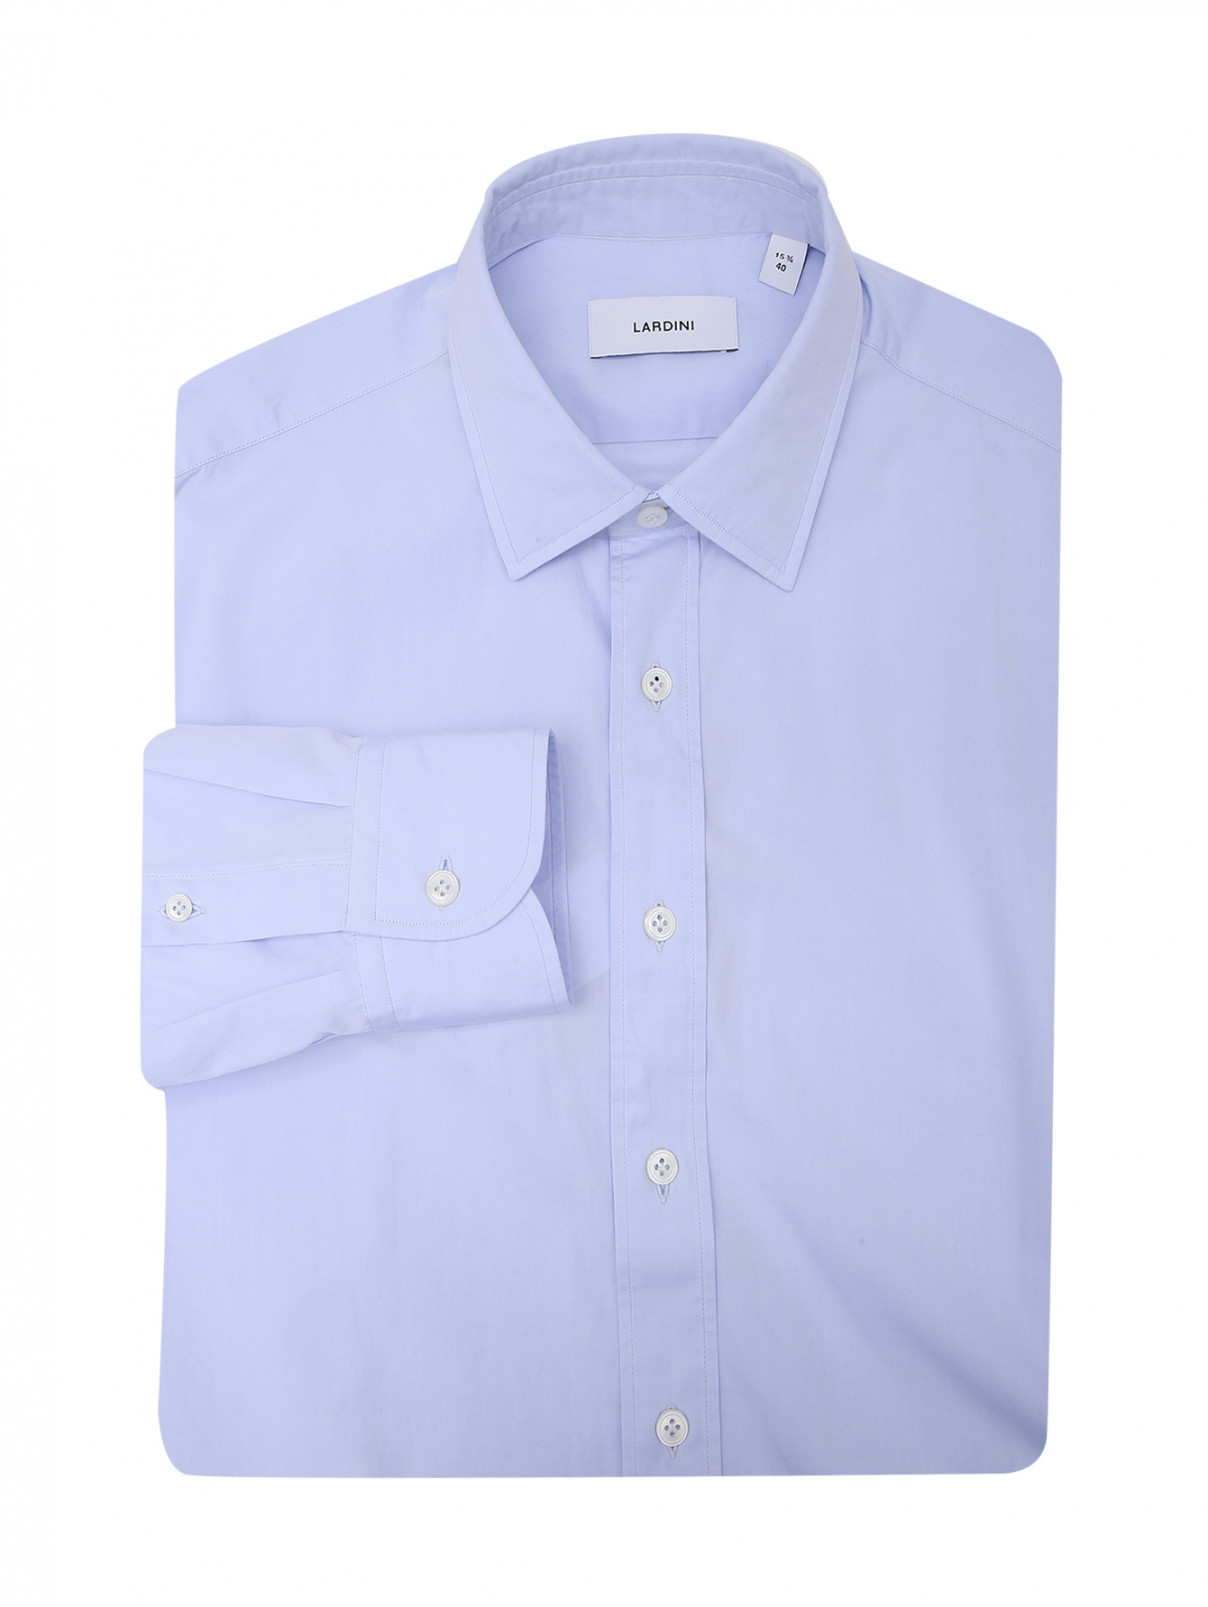 Рубашка из хлопка LARDINI  –  Общий вид  – Цвет:  Синий